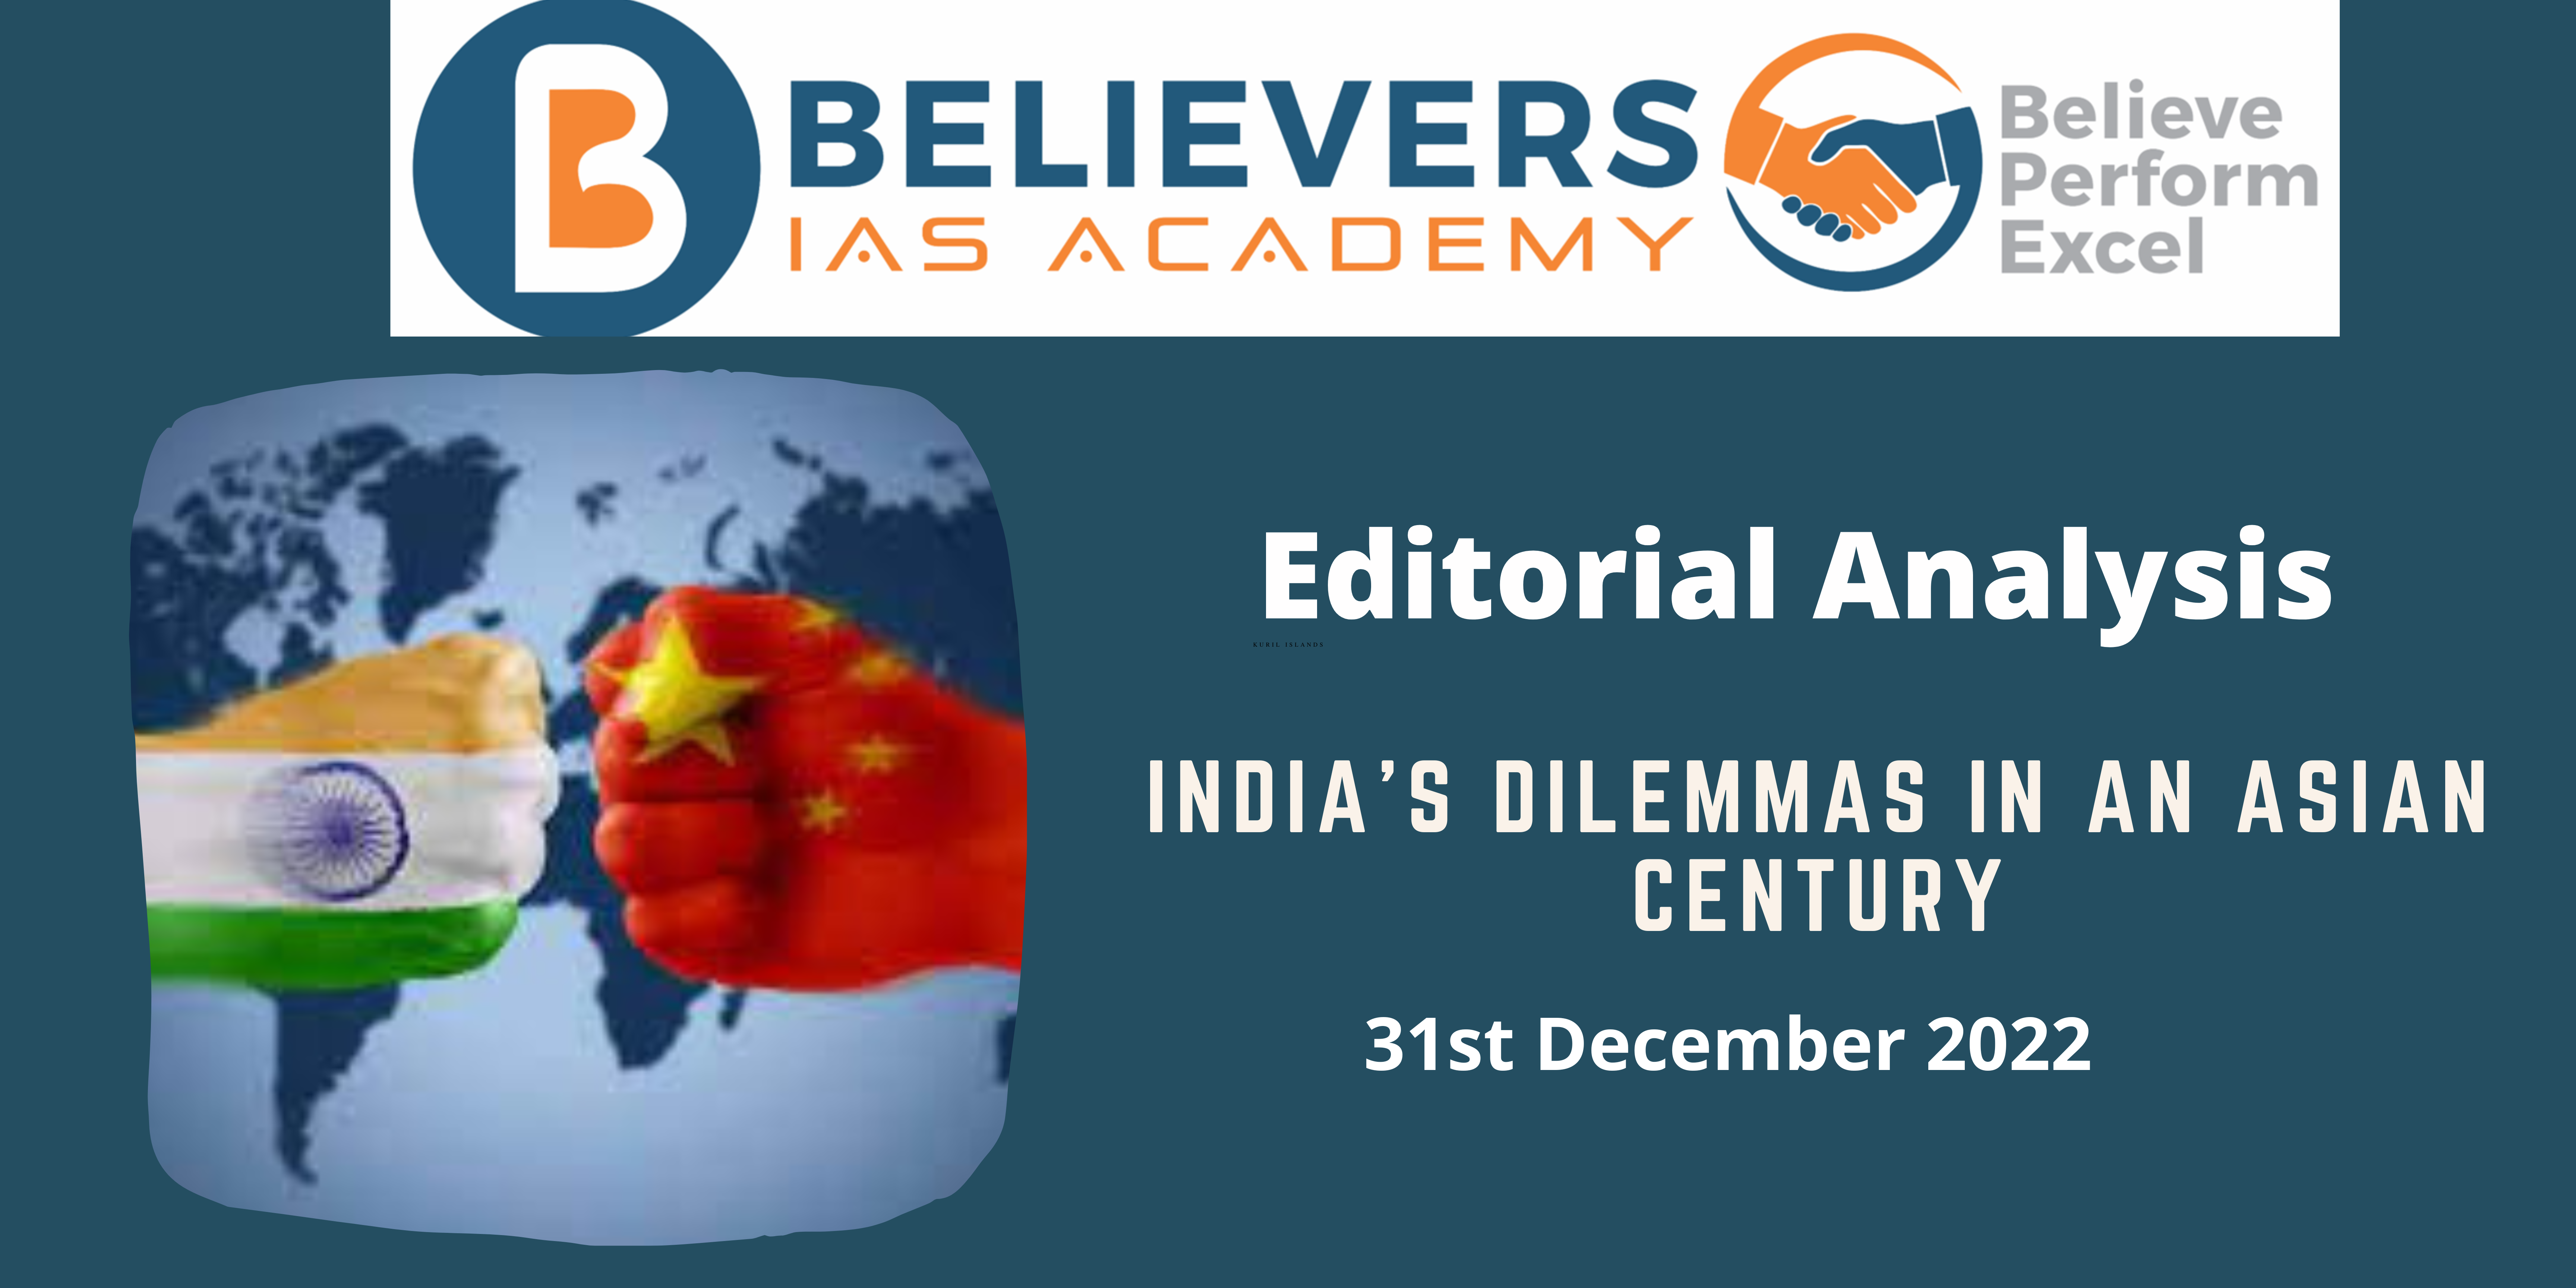 India’s dilemmas in an Asian century